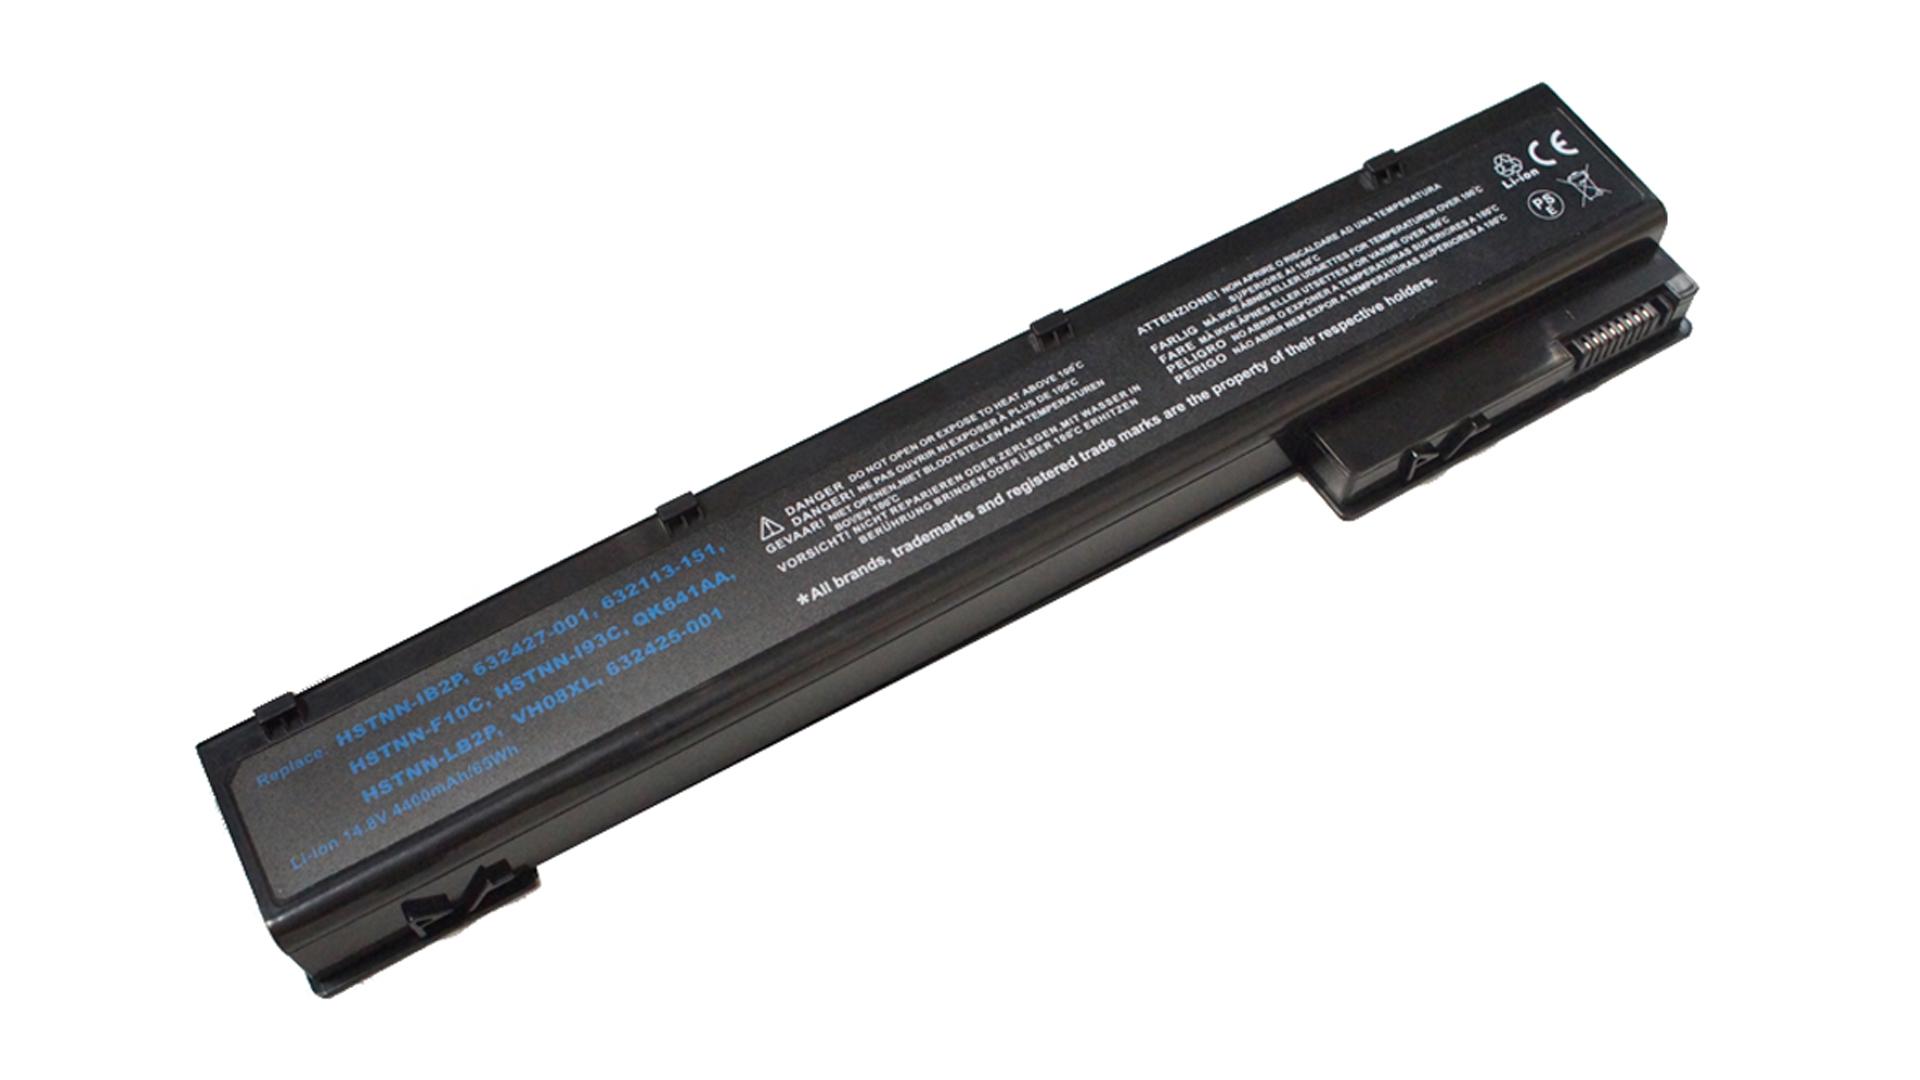 HP 632113-151 battery